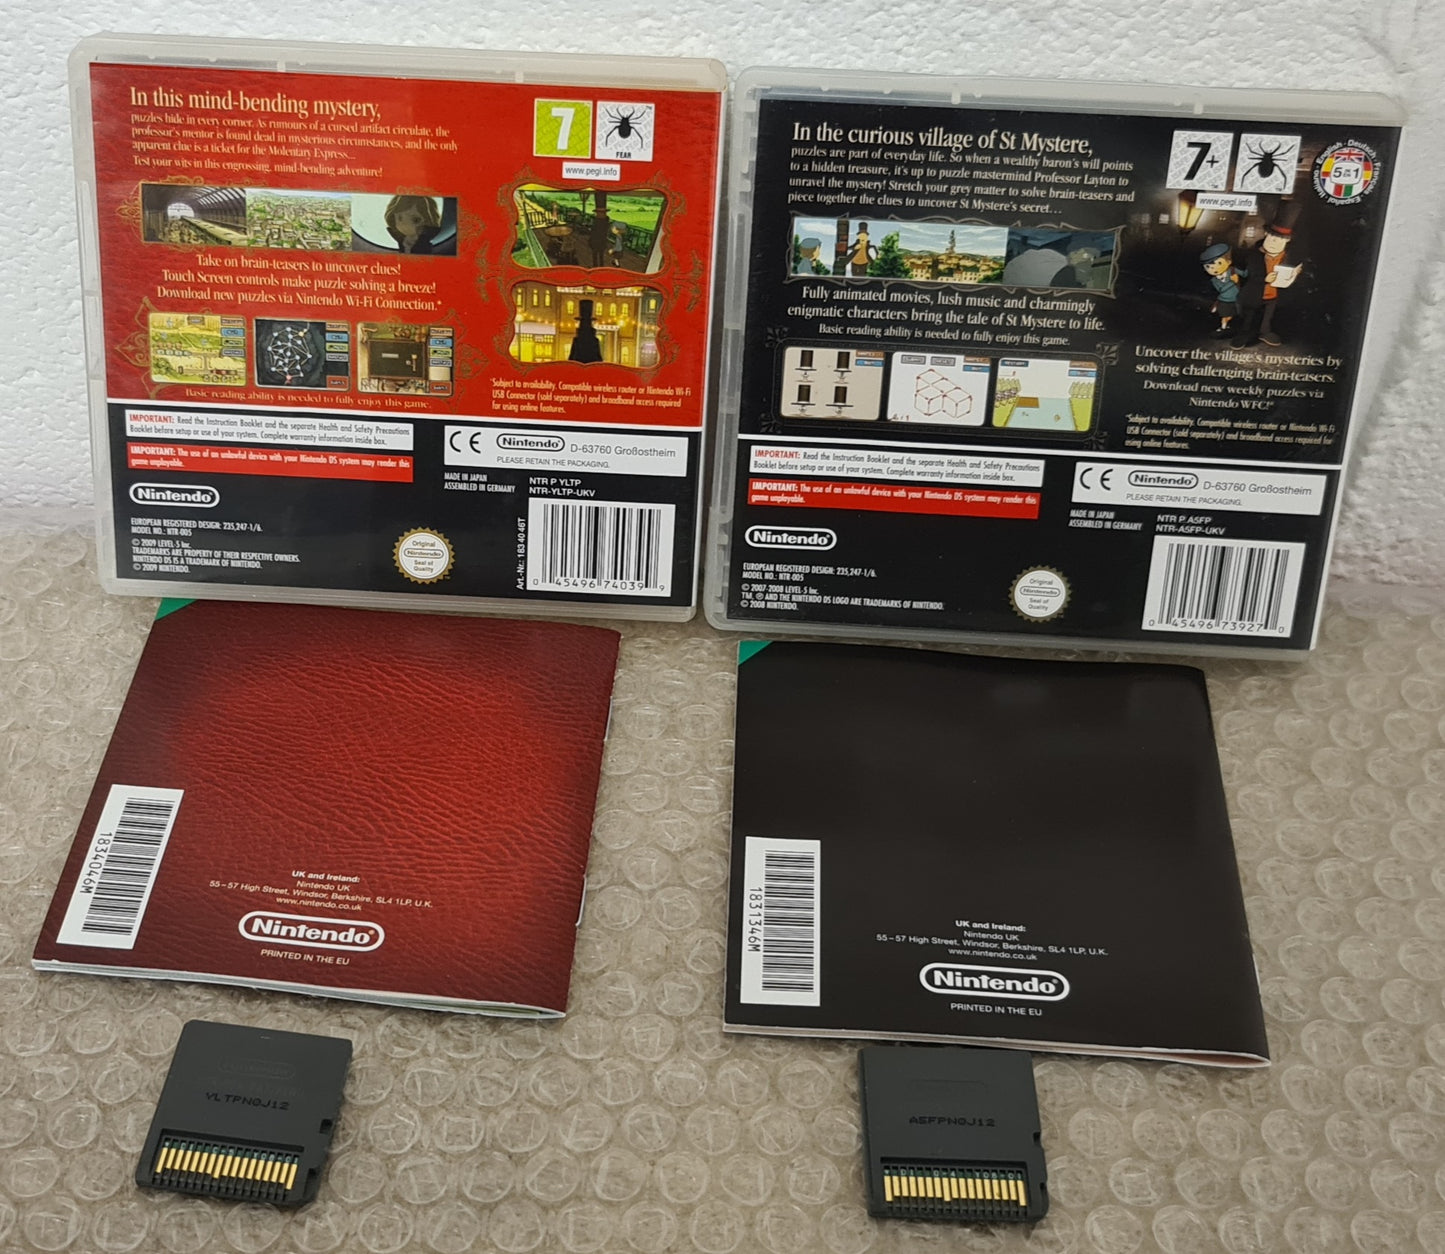 Professor Layton Pandora's Box & Curious Village Nintendo DS Game Bundle